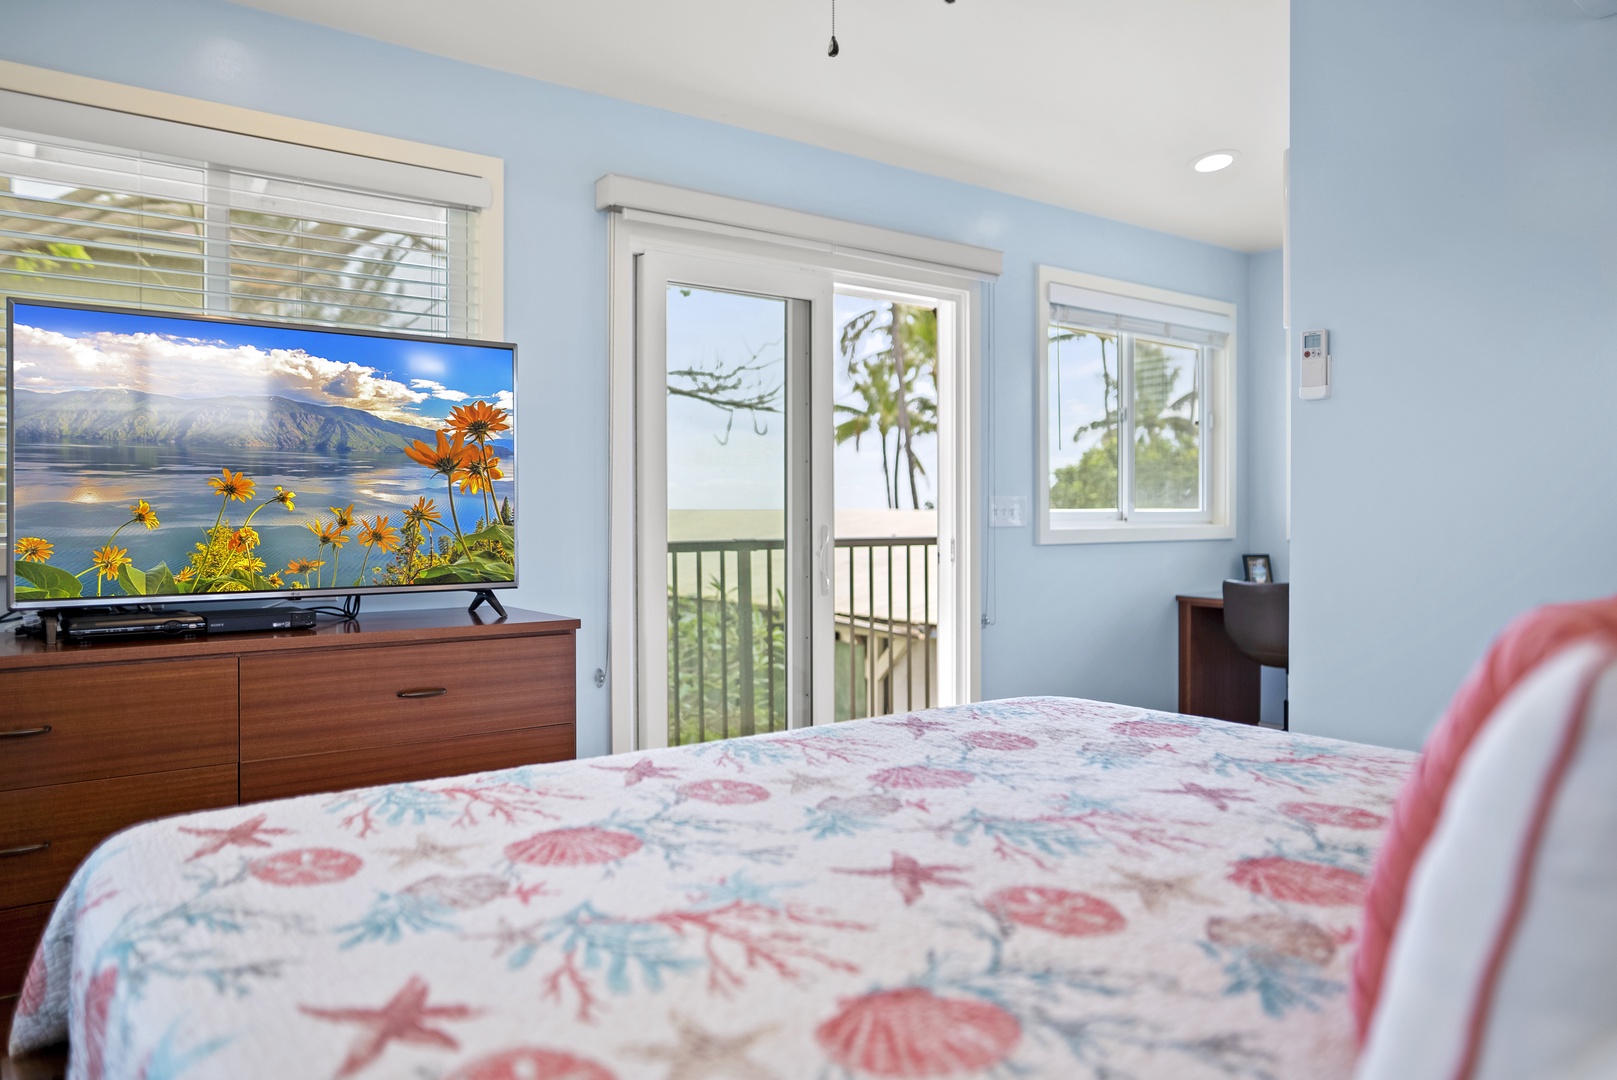 Waialua Vacation Rentals, Kala'iku Cottage - Bedroom has a balcony with a peaceful view